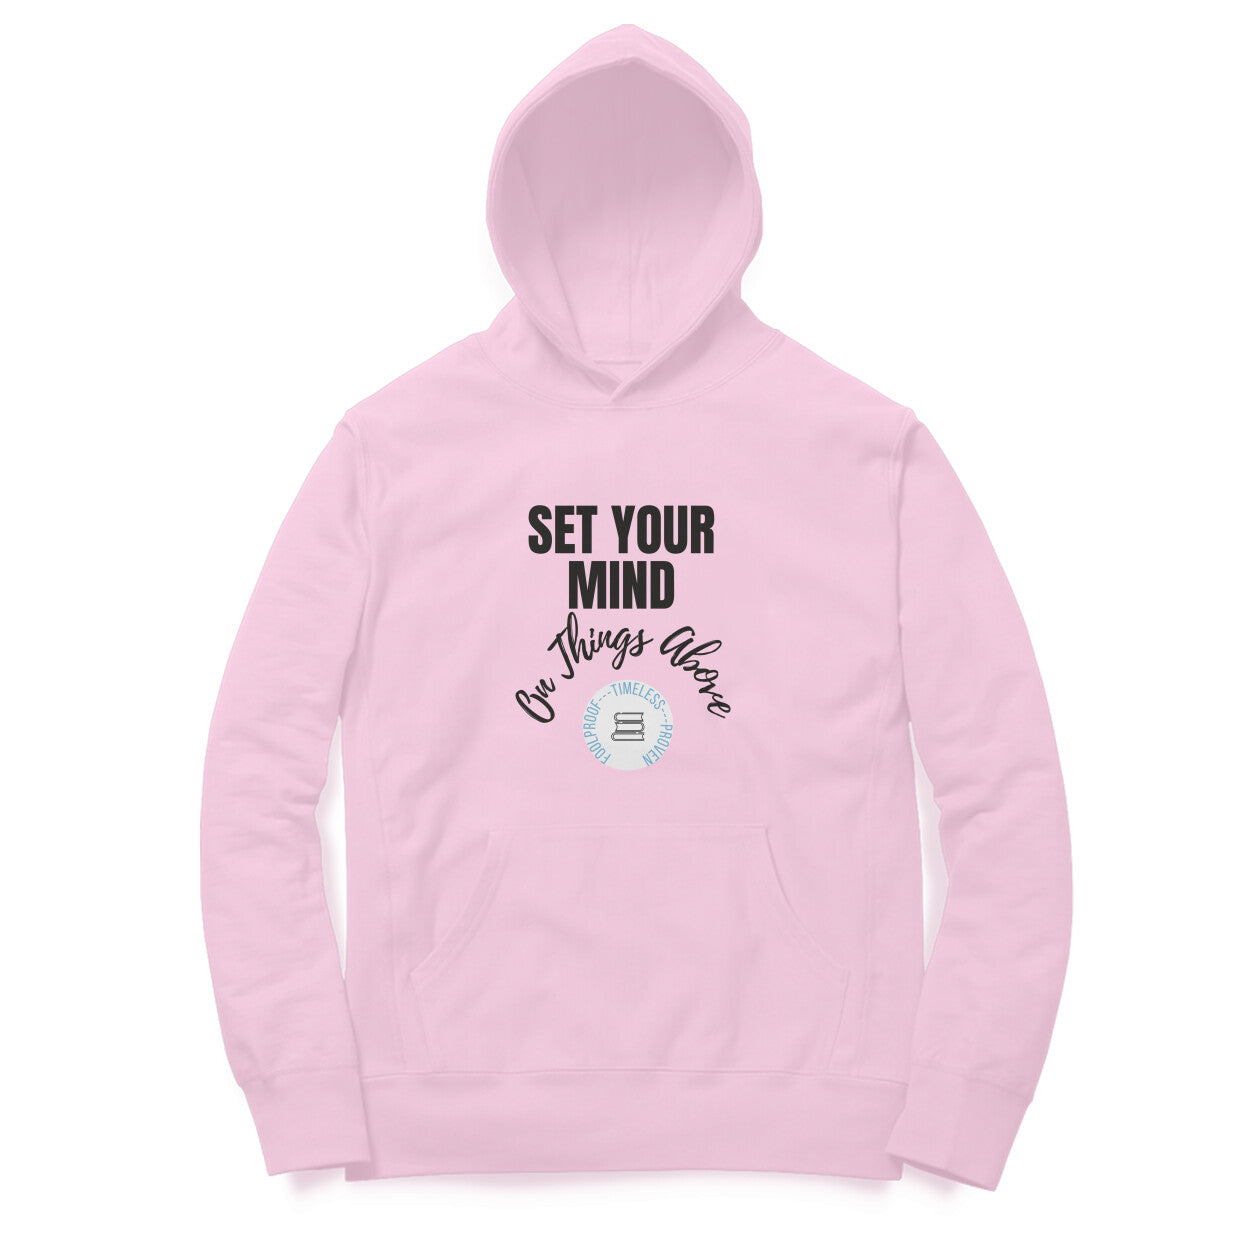 Set your mind' hoodie